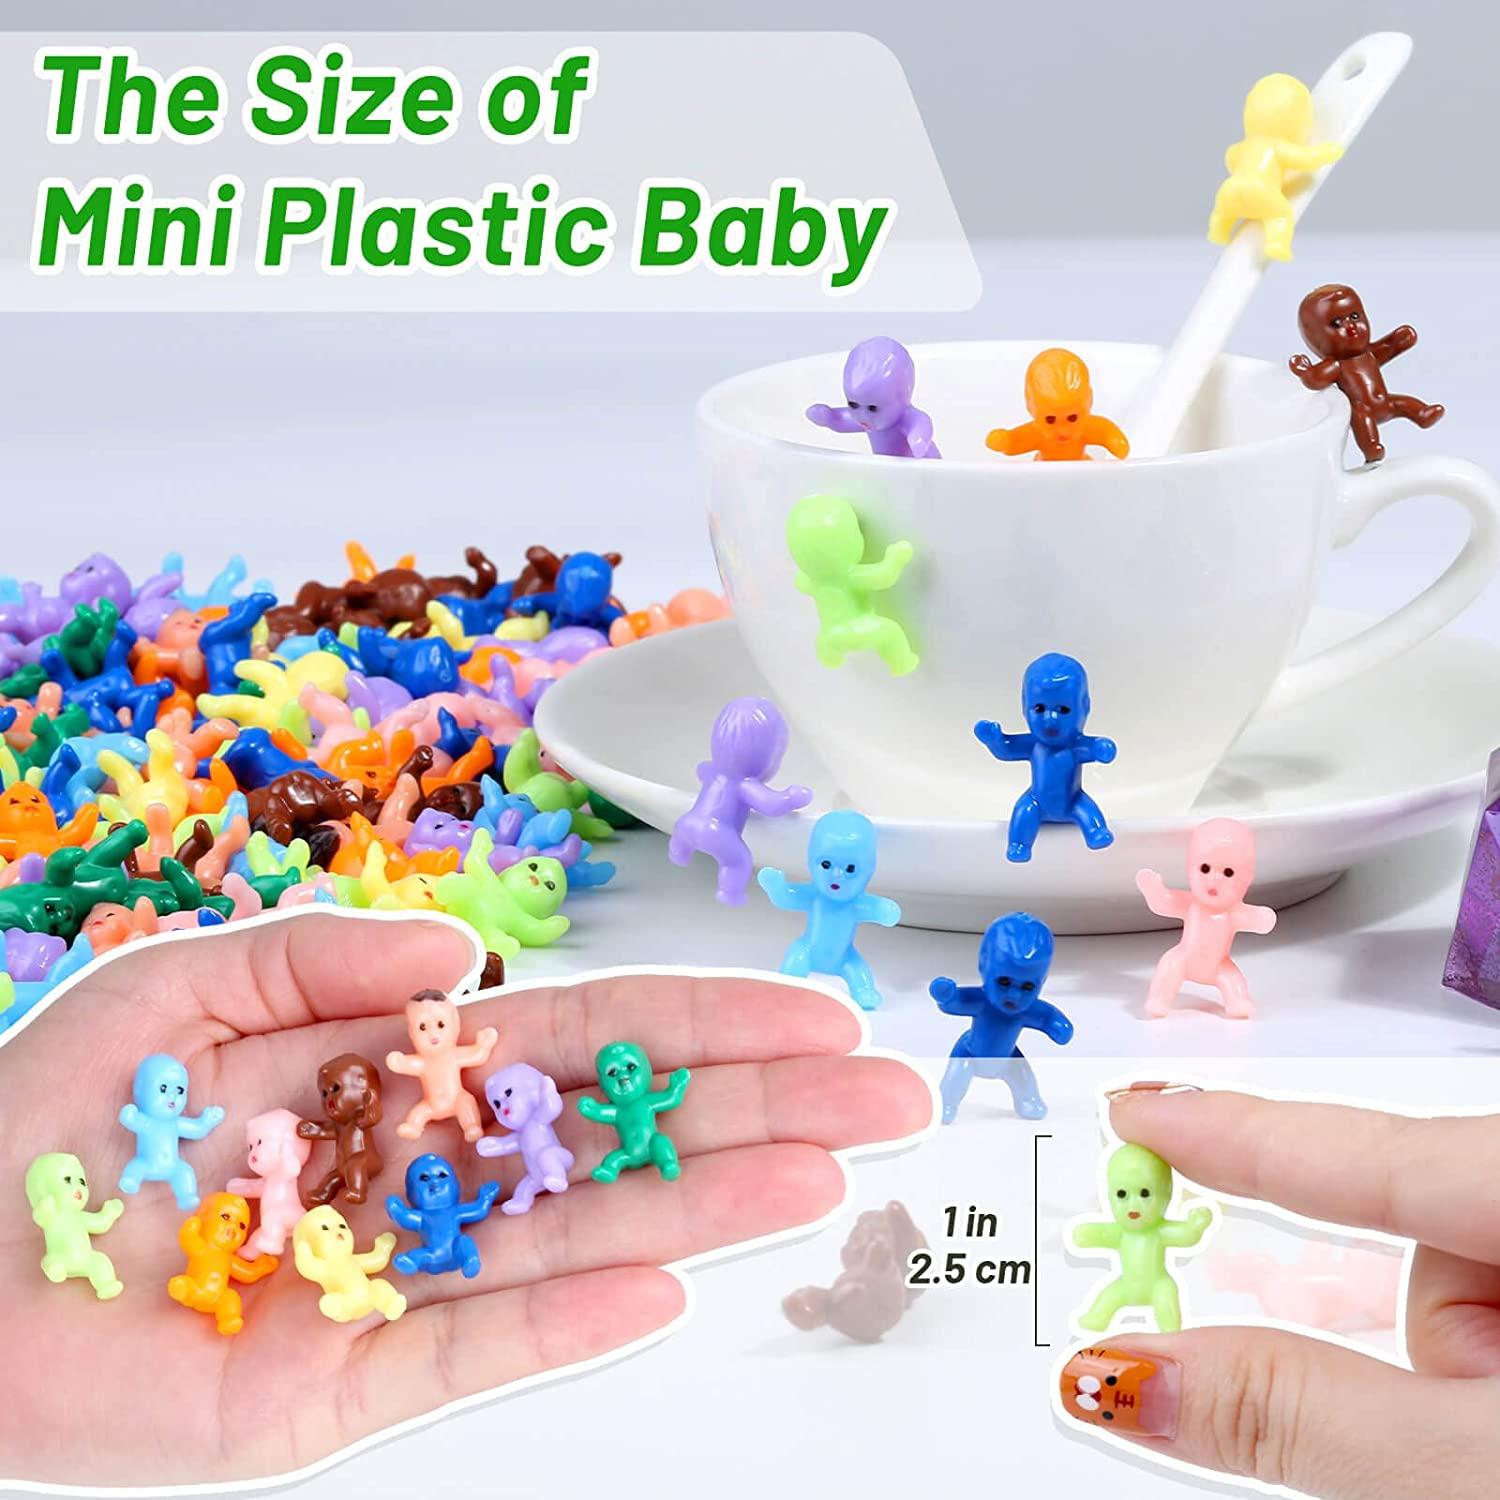 Mini Plastic Babies, Selizo 200pcs Tiny Plastic Baby Figurines